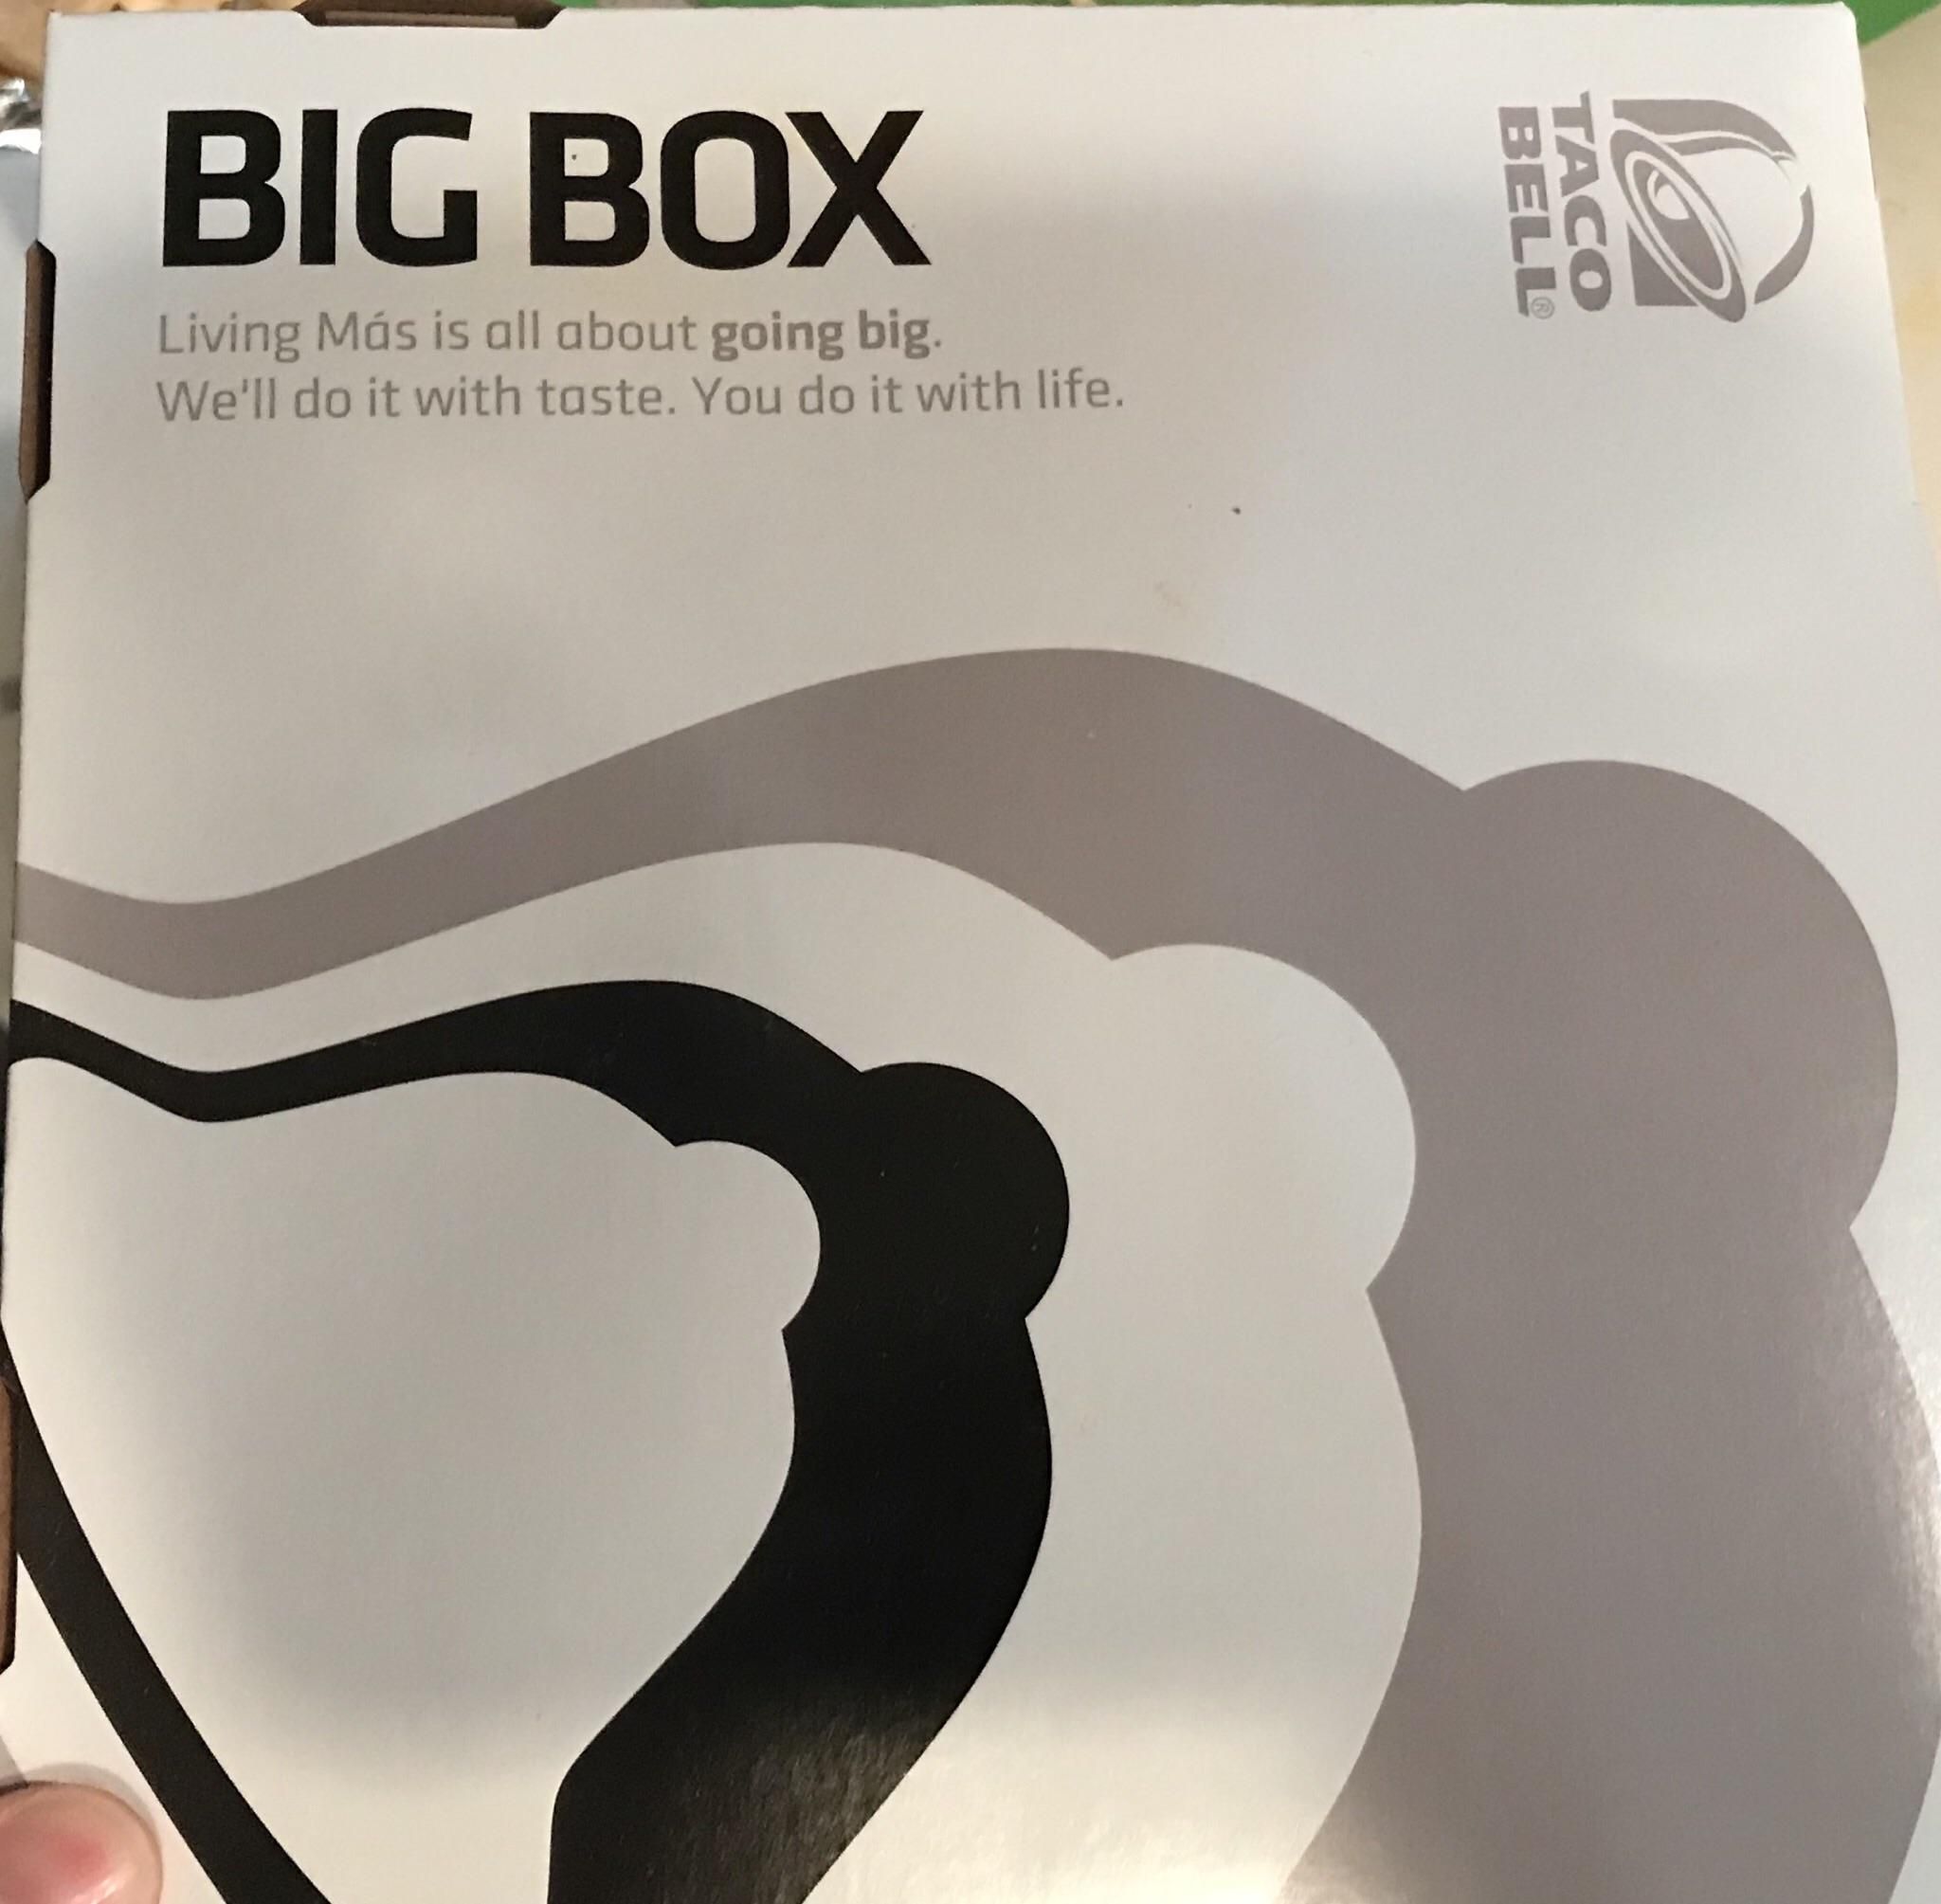 Taco Bell’s big box looks like a bra sizing chart.